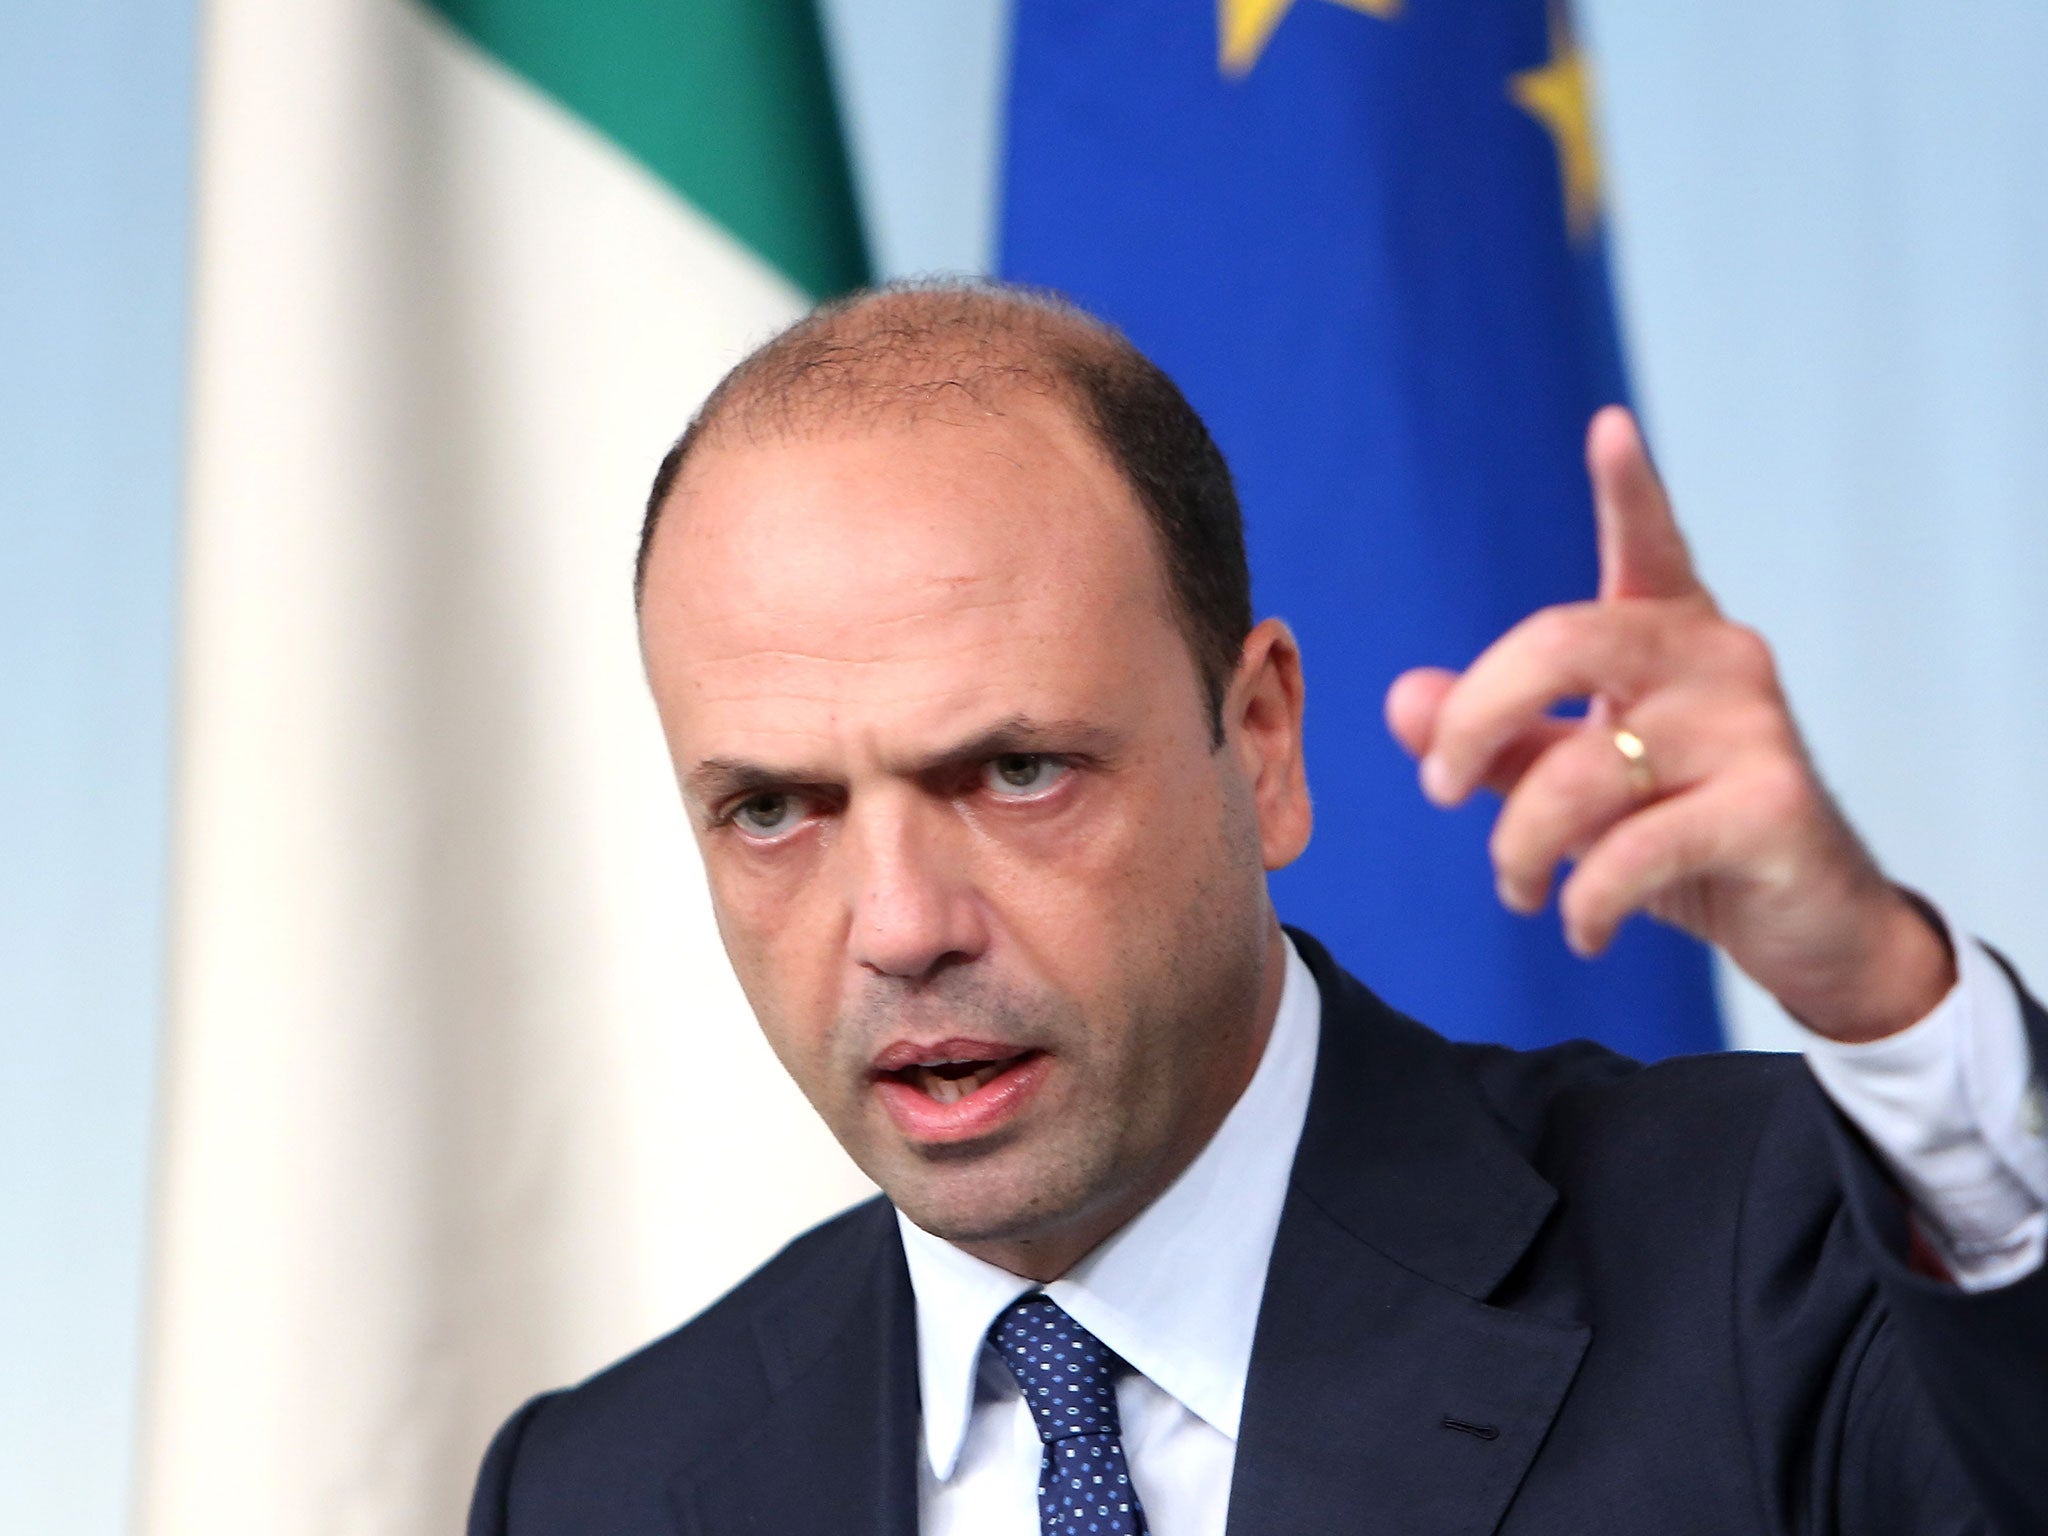 Interior Minister Angelino Alfano said Italian Islam would be 'law abiding'